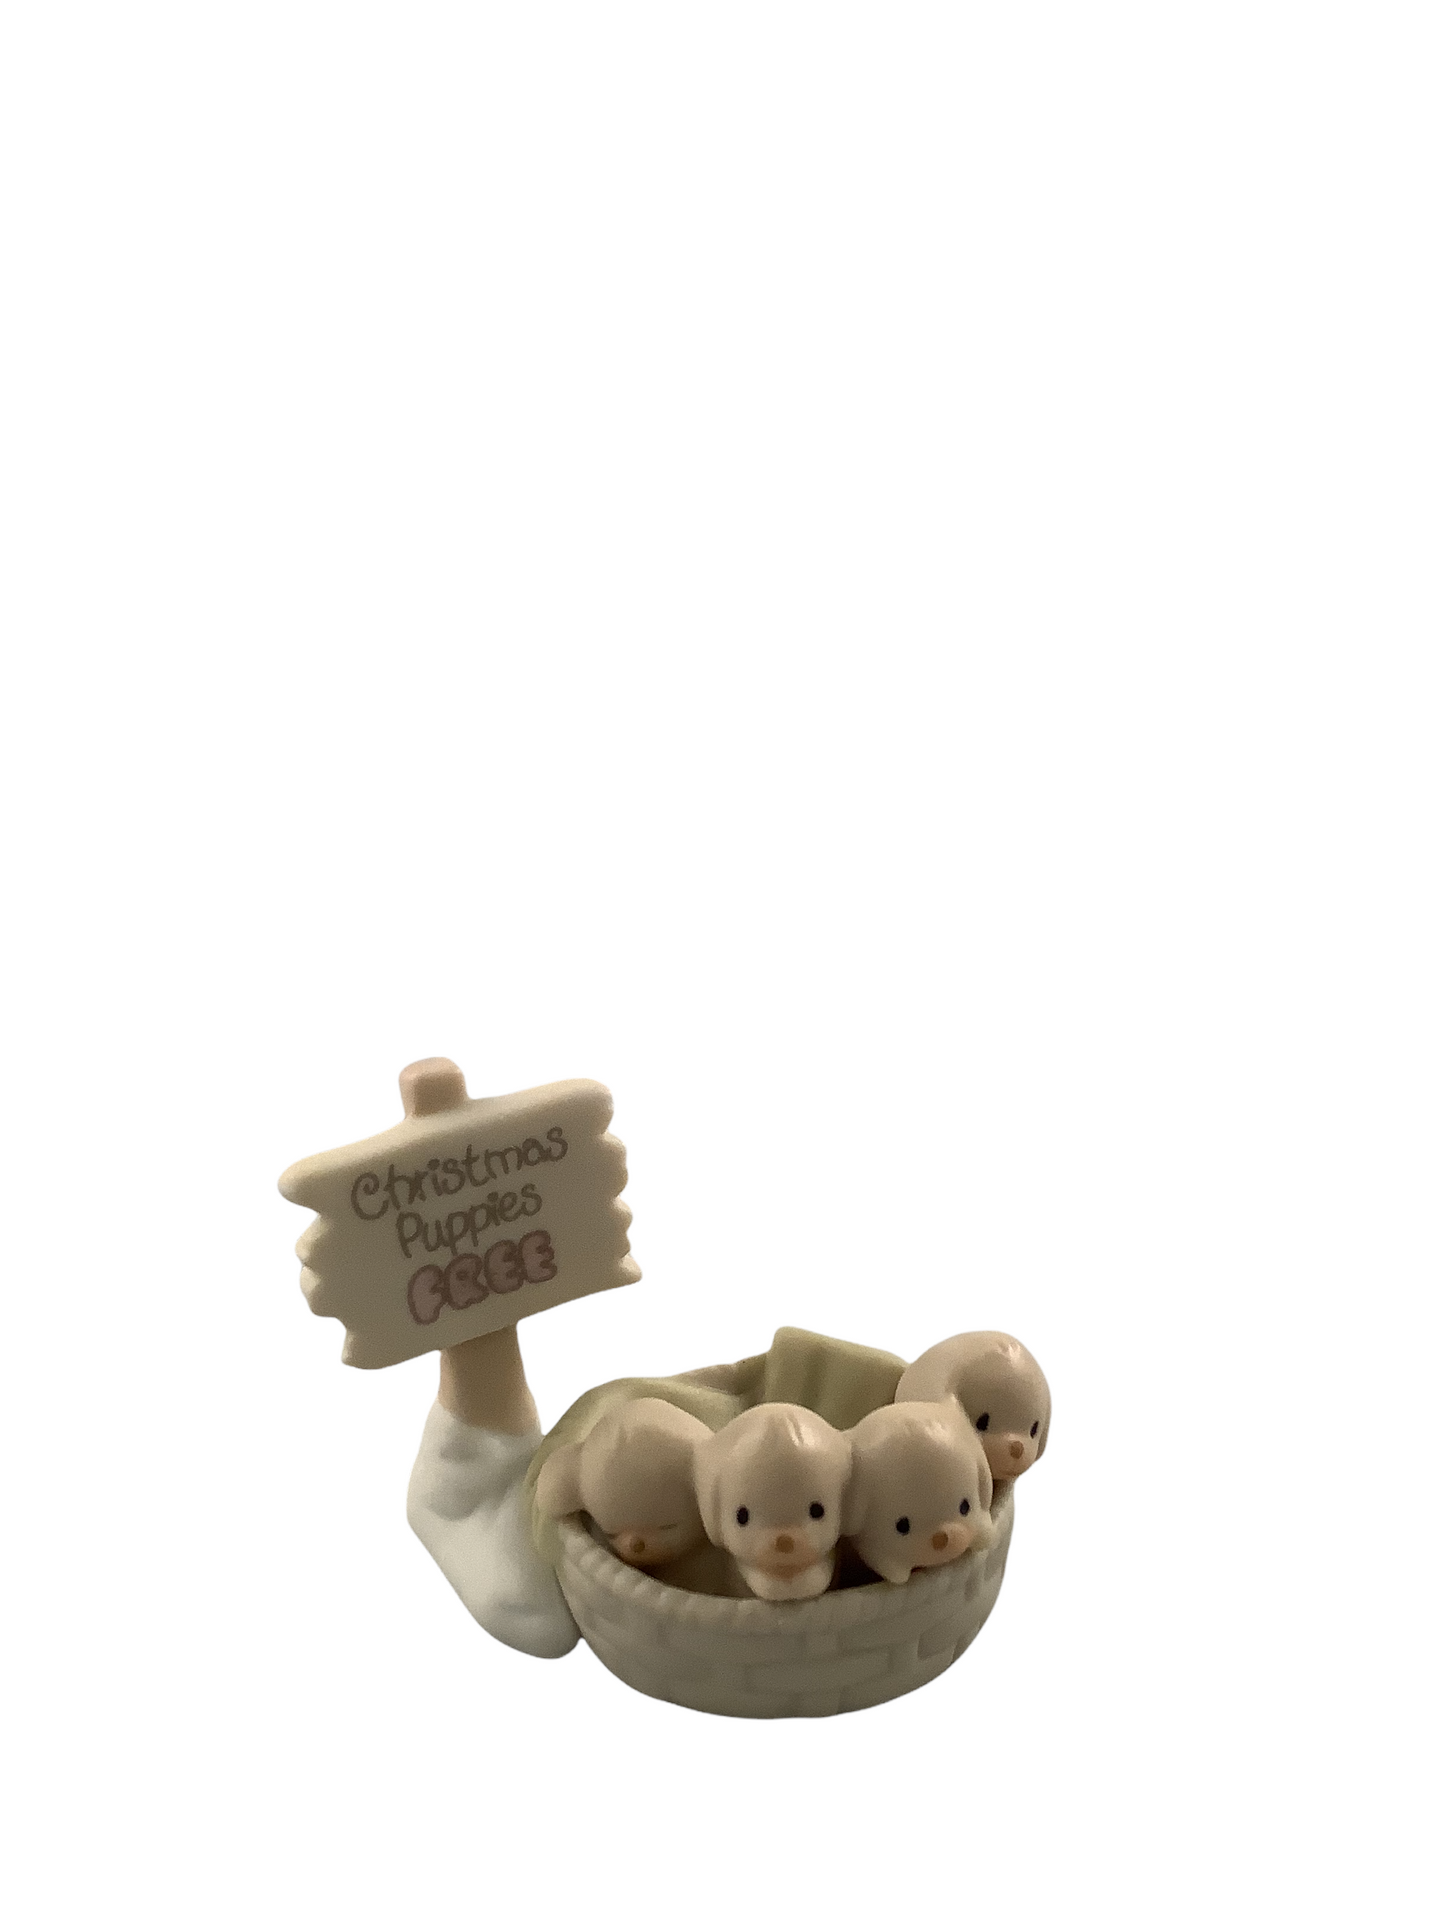 Free Christmas Puppies - Precious Moment Figurine